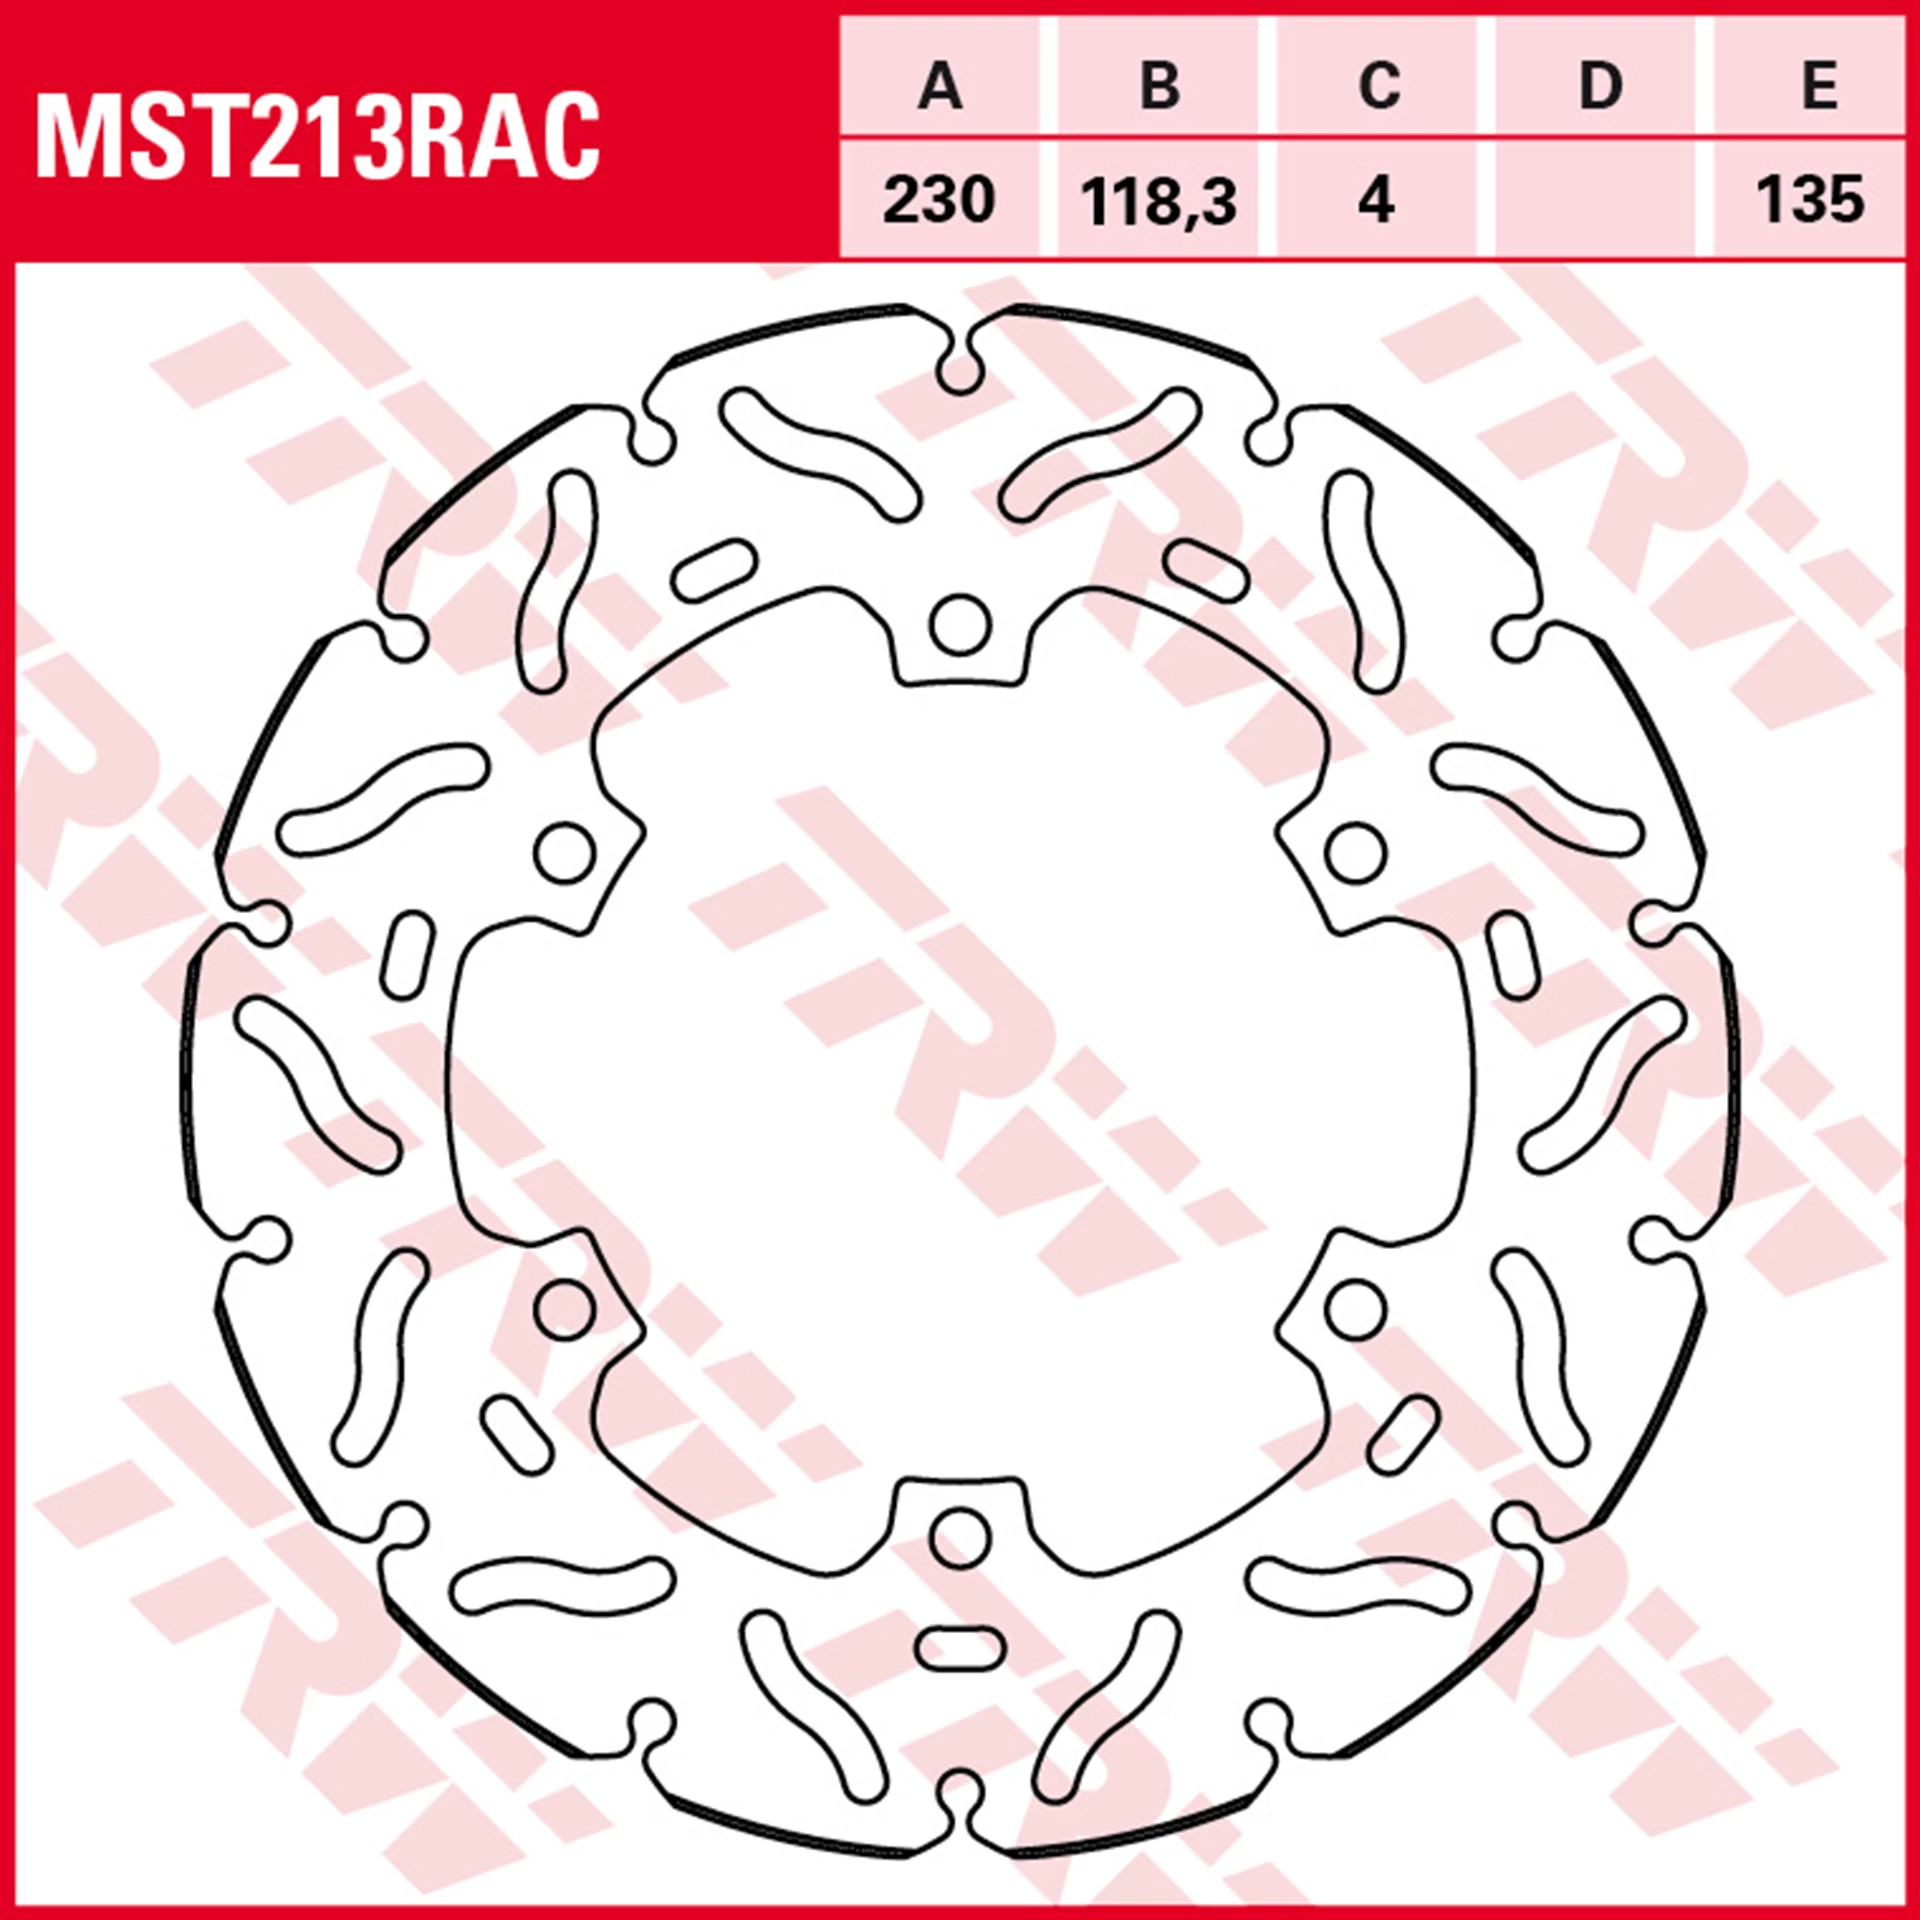 MST213RAC